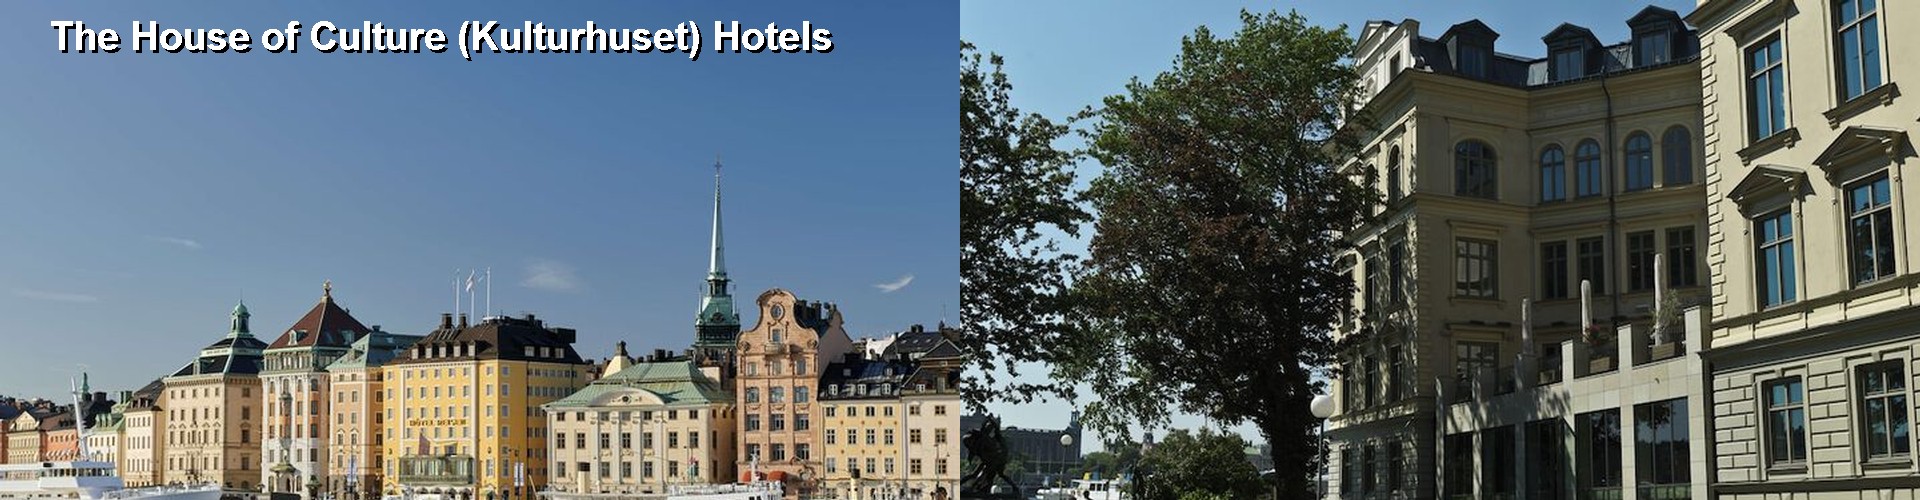 5 Best Hotels near The House of Culture (Kulturhuset)